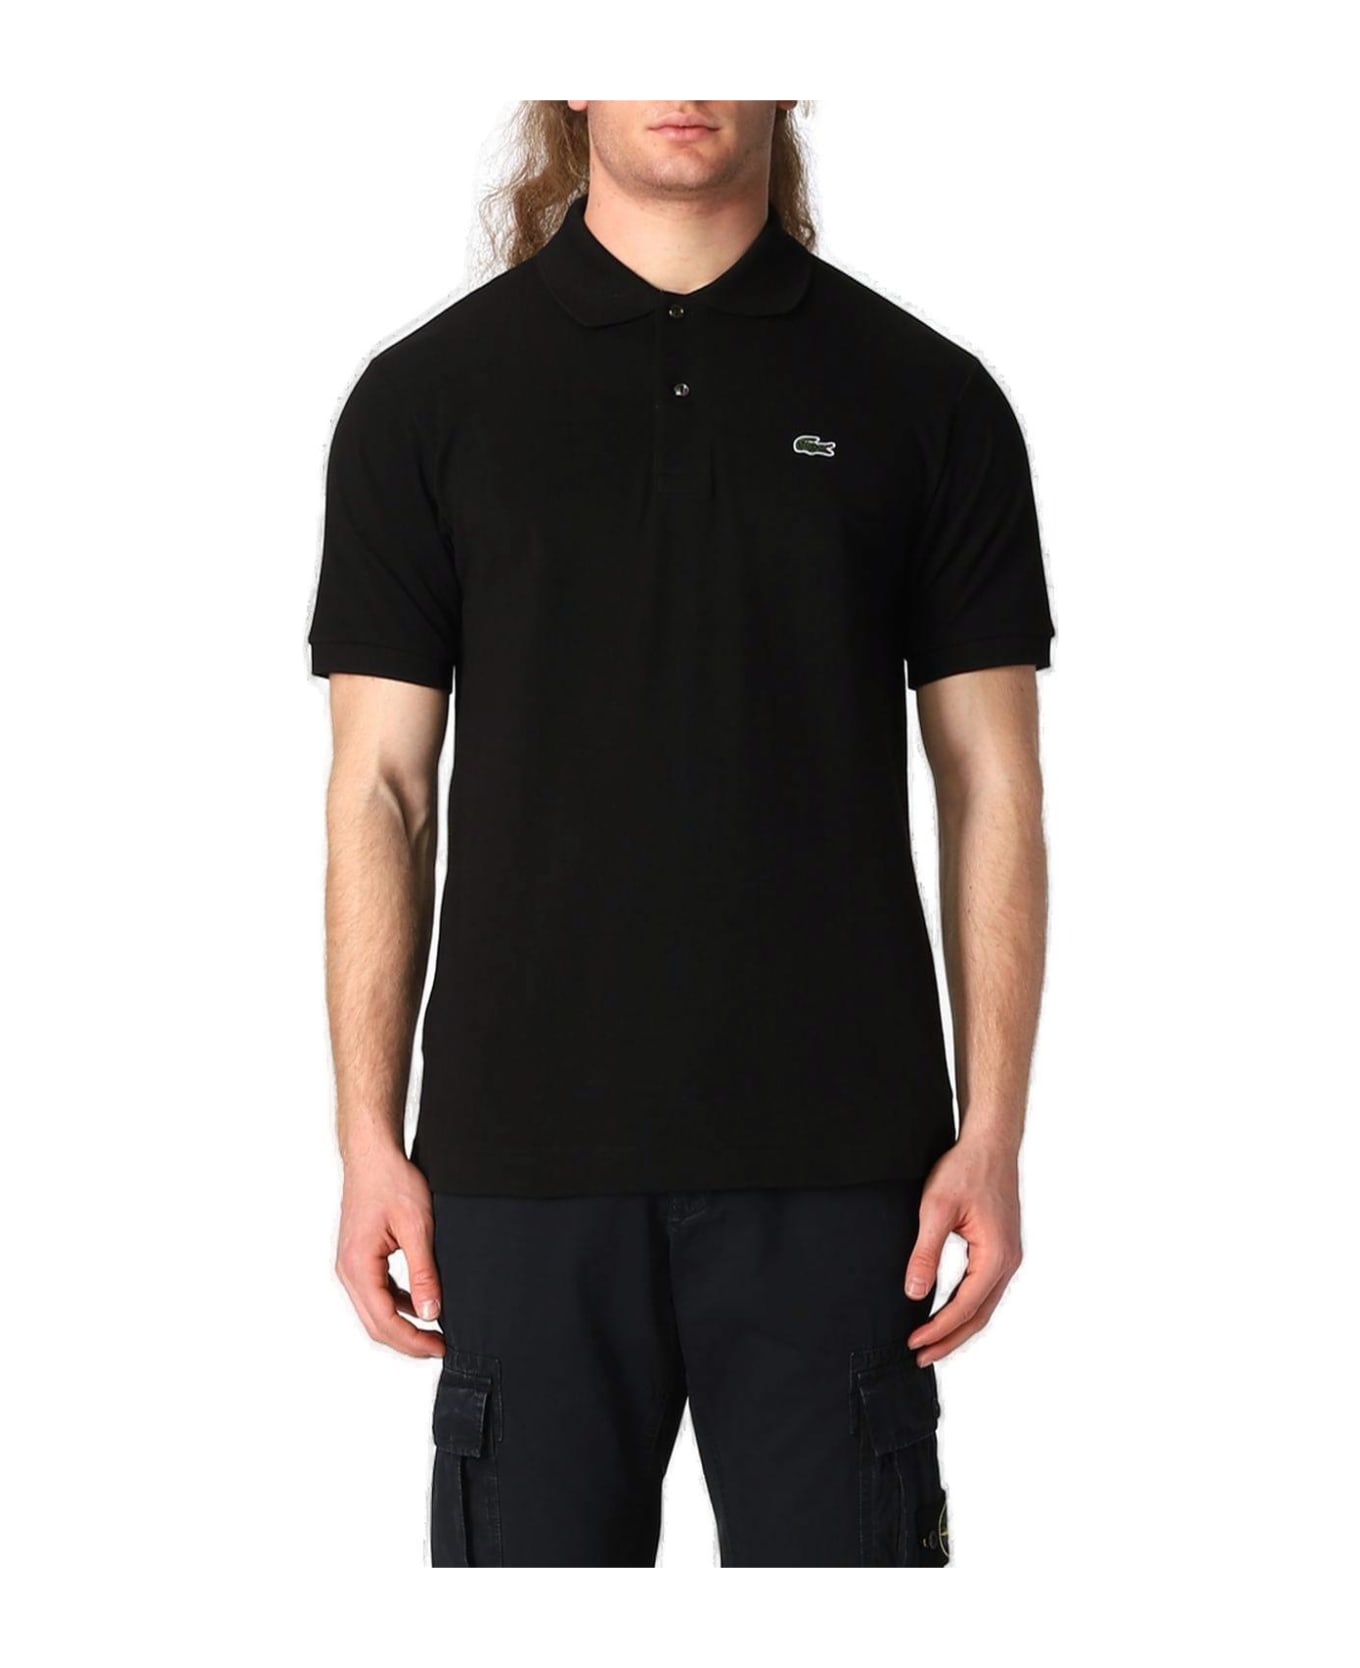 Lacoste Original L.12.12 Piqué Short-sleeved Polo Shirt - Noir シャツ